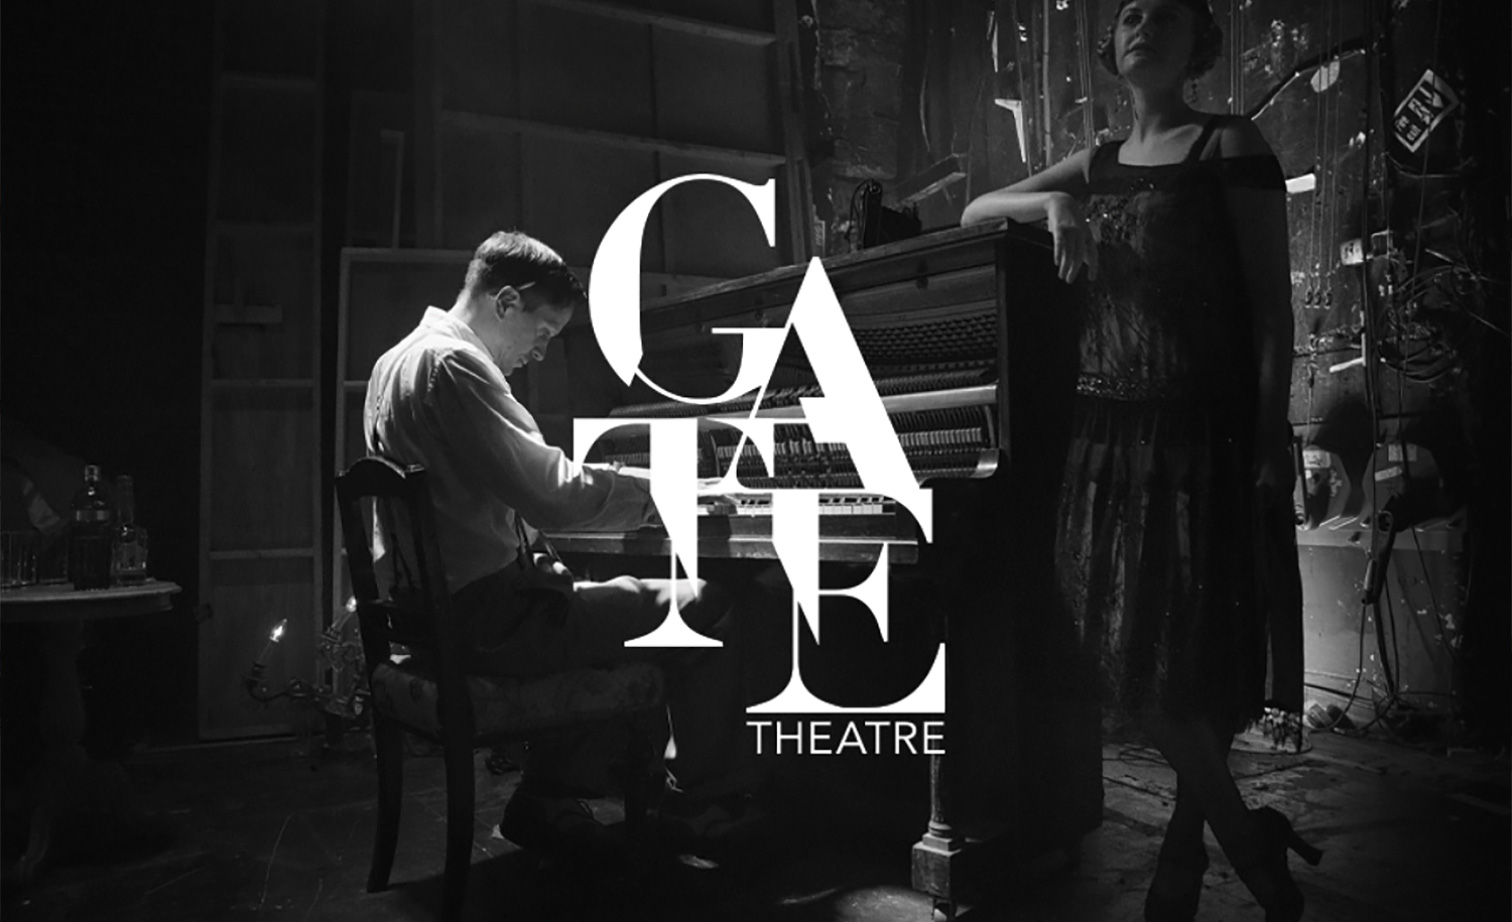 Gate Theatre website screenshots